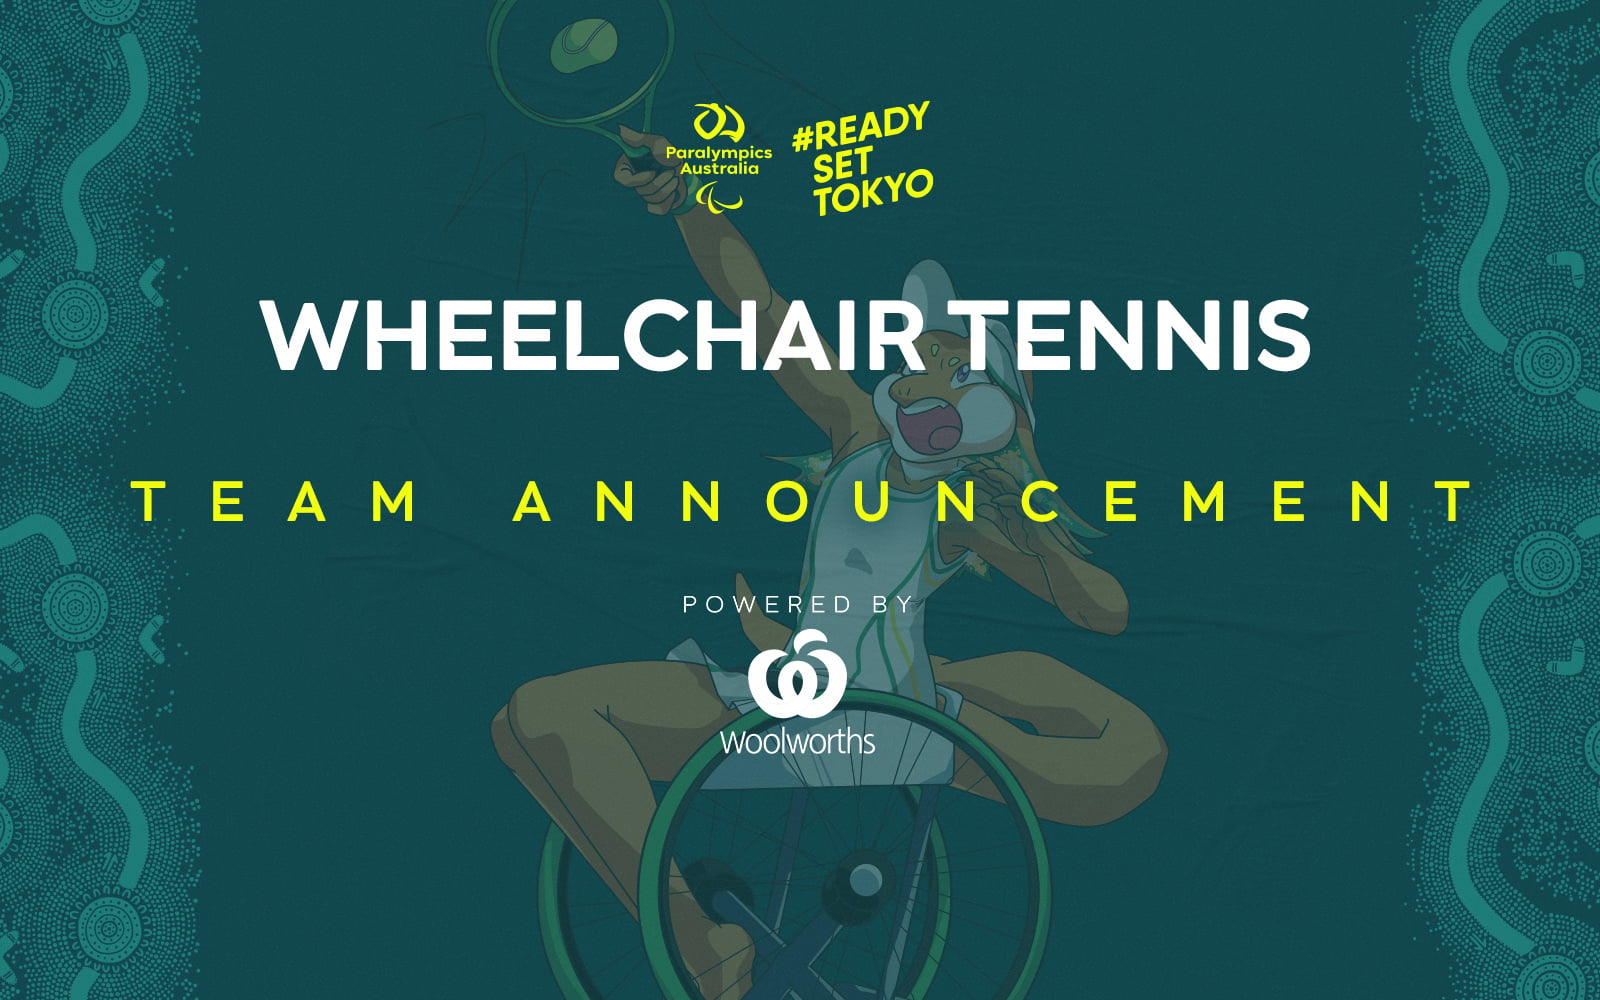 Australia’s Wheelchair Tennis Quartet Confirmed For Tokyo 2020